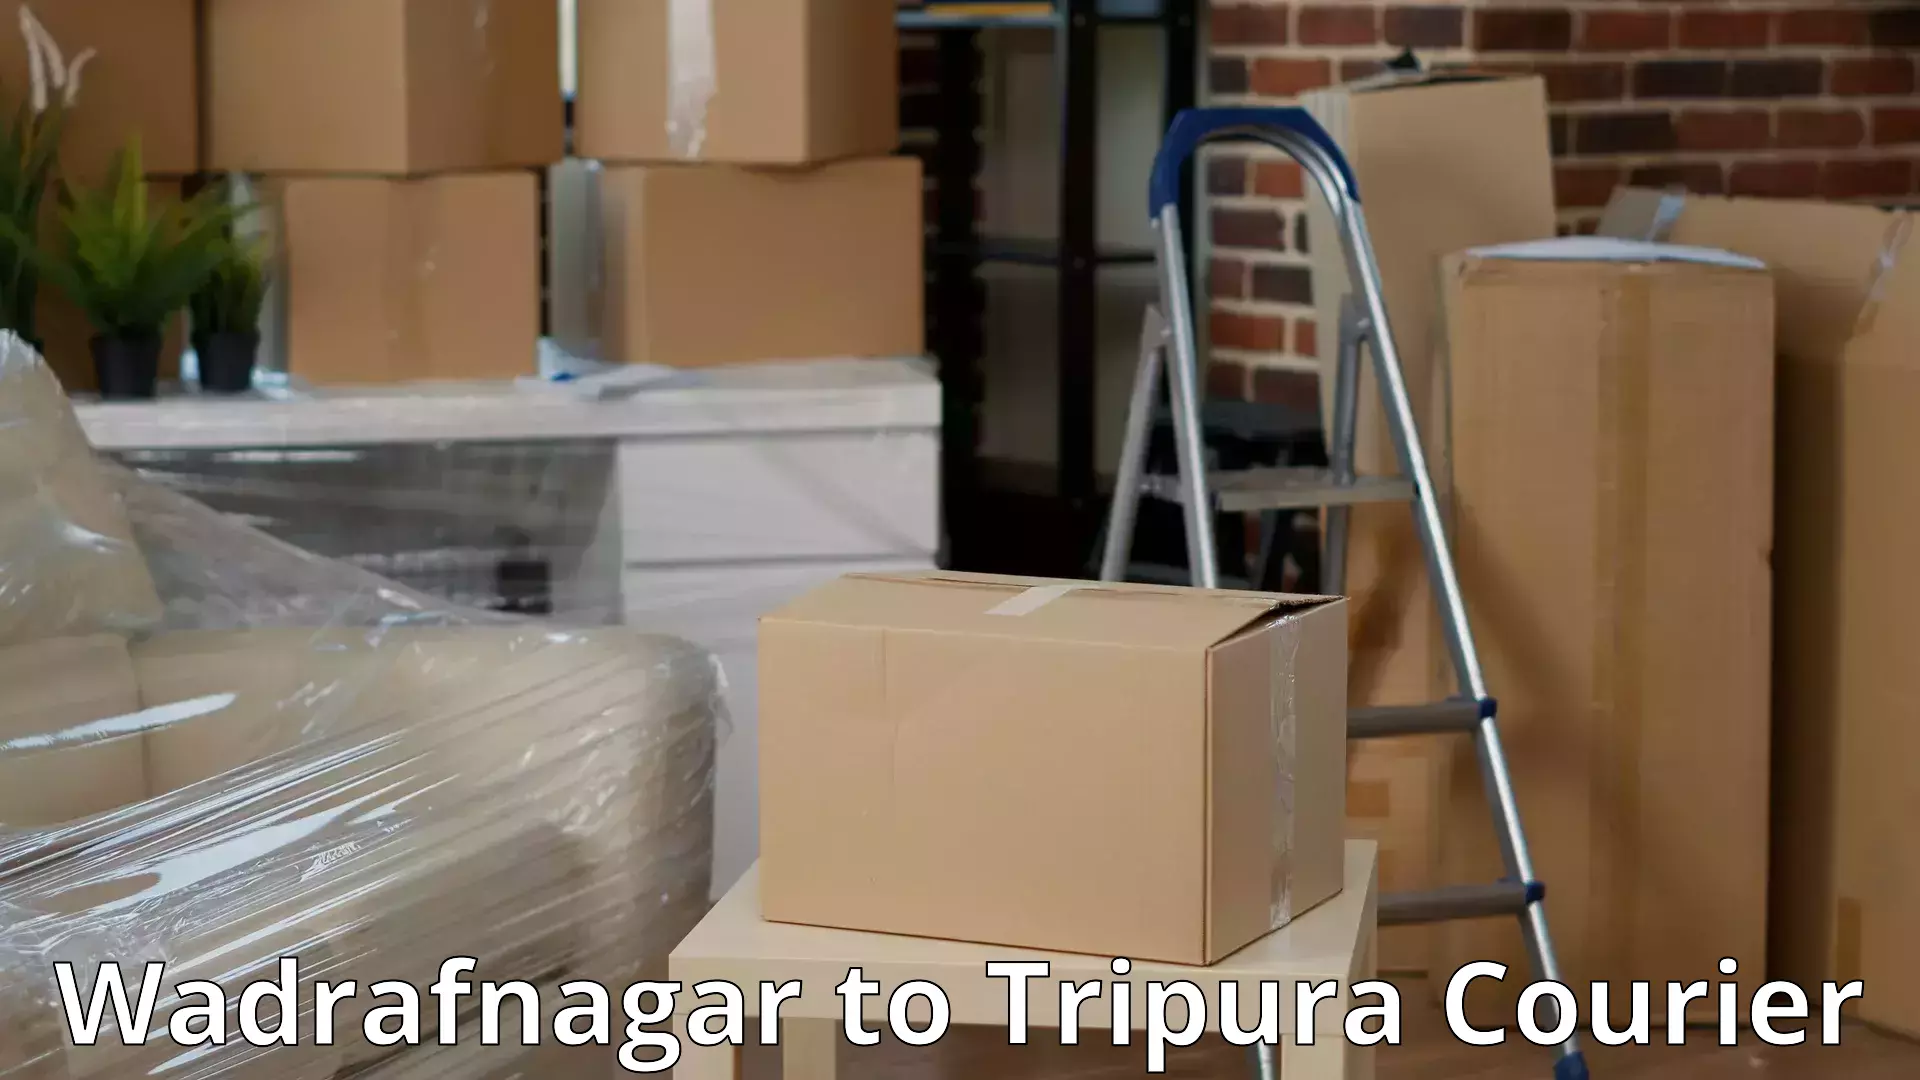 Advanced moving solutions Wadrafnagar to Udaipur Tripura